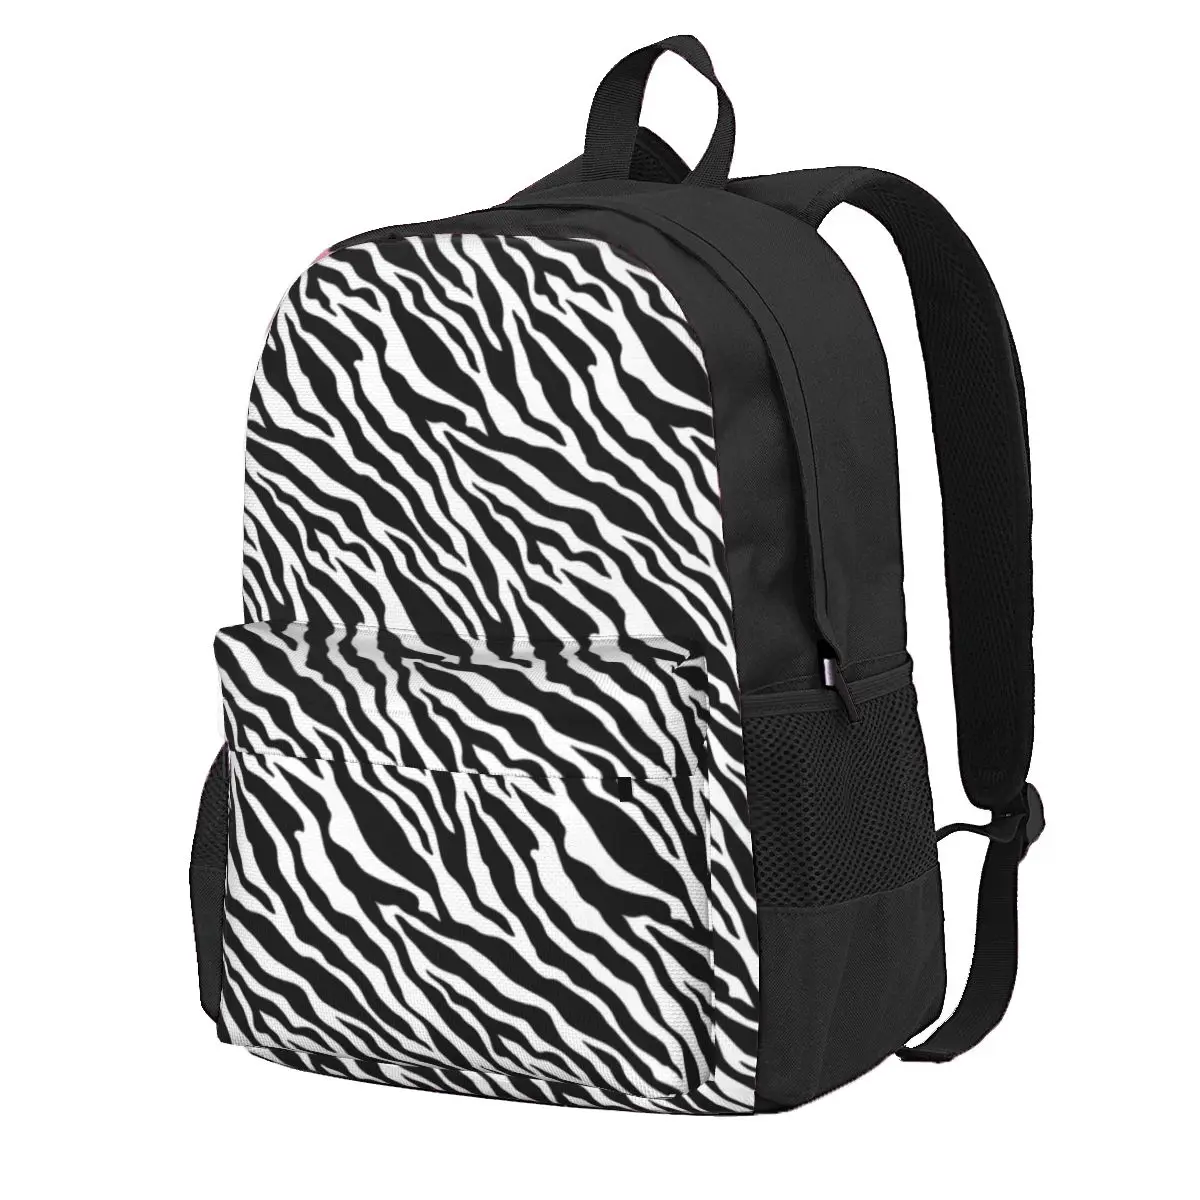 

Zebra Print Backpack White And Black Stripes Women Men Polyester Camping Backpacks Breathable Cute High School Bags Rucksack